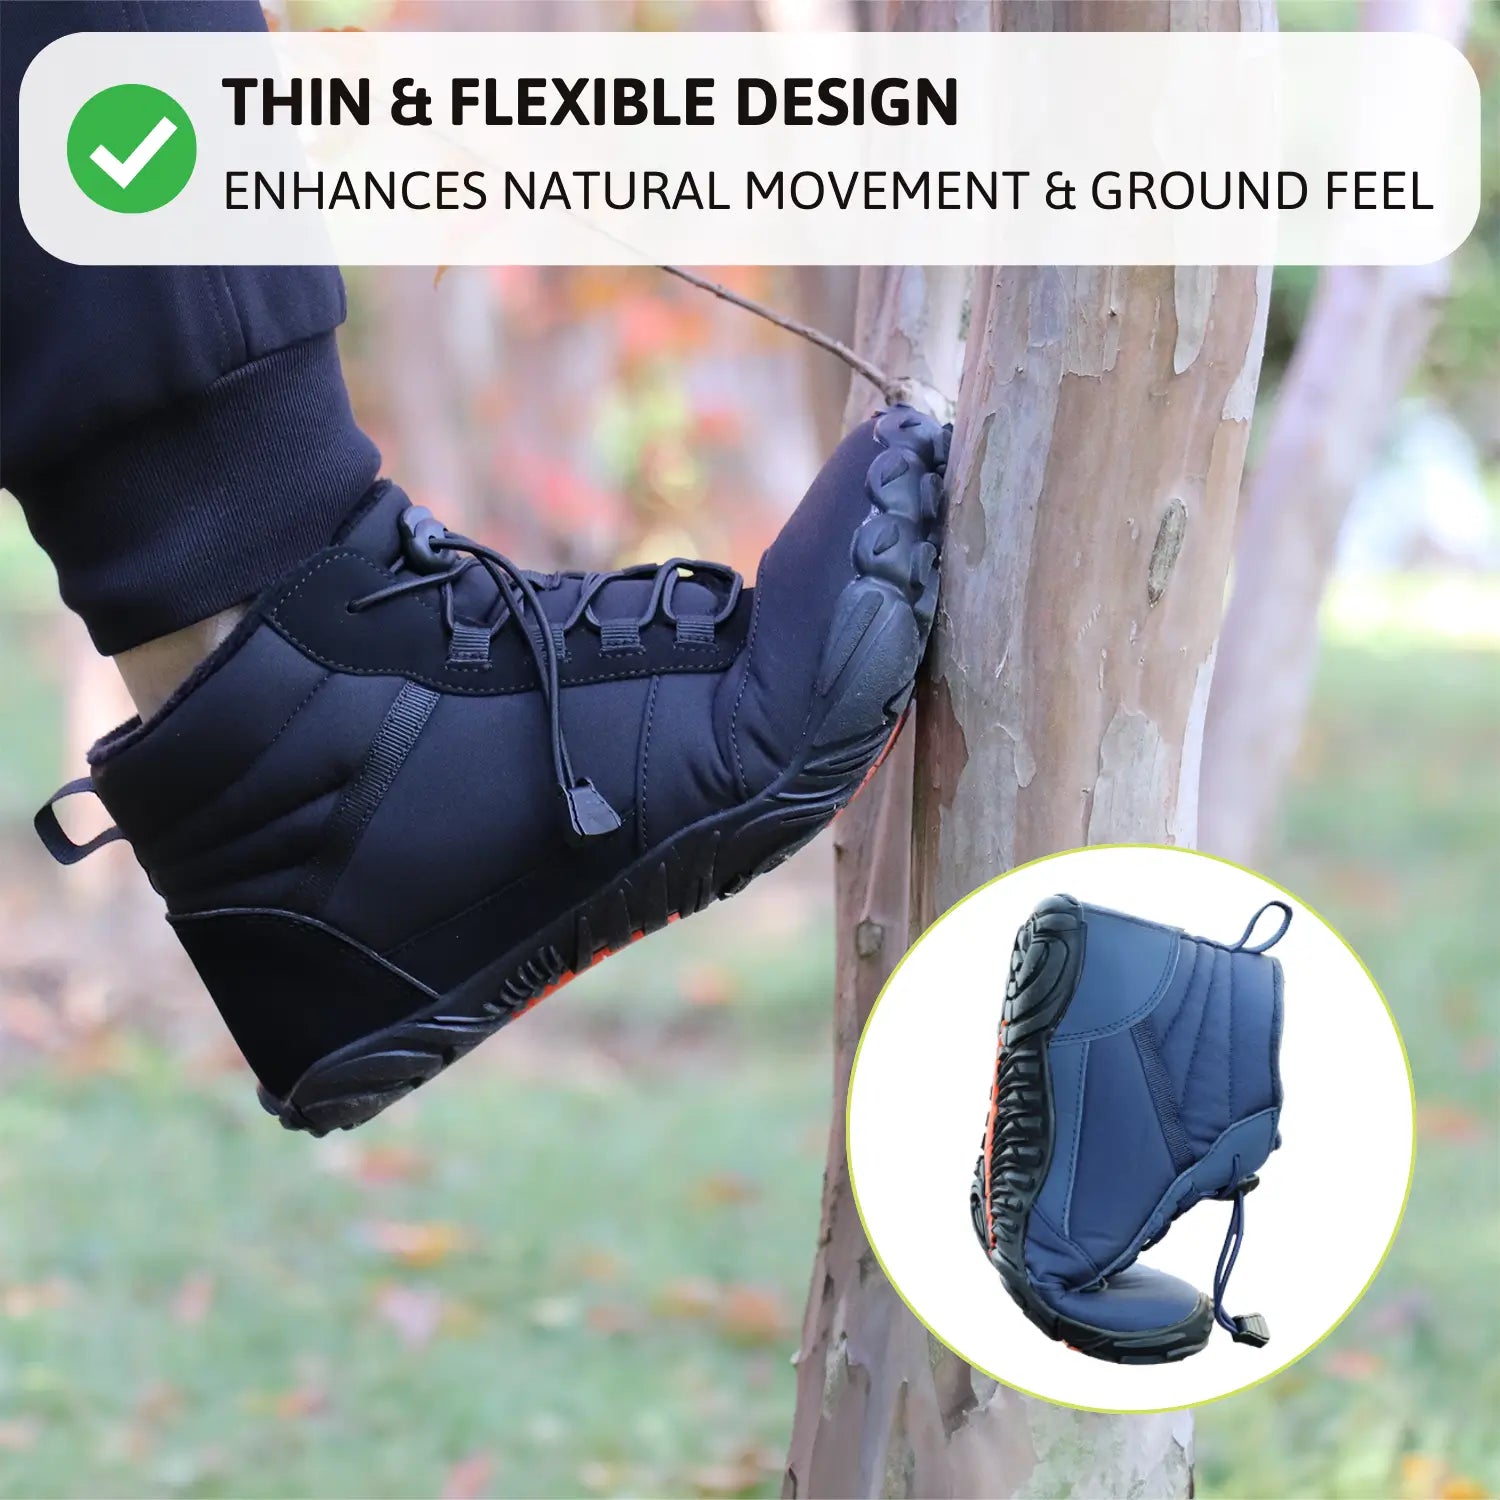 Polar - Non-slip & waterproof winter barefoot shoes (Unisex)